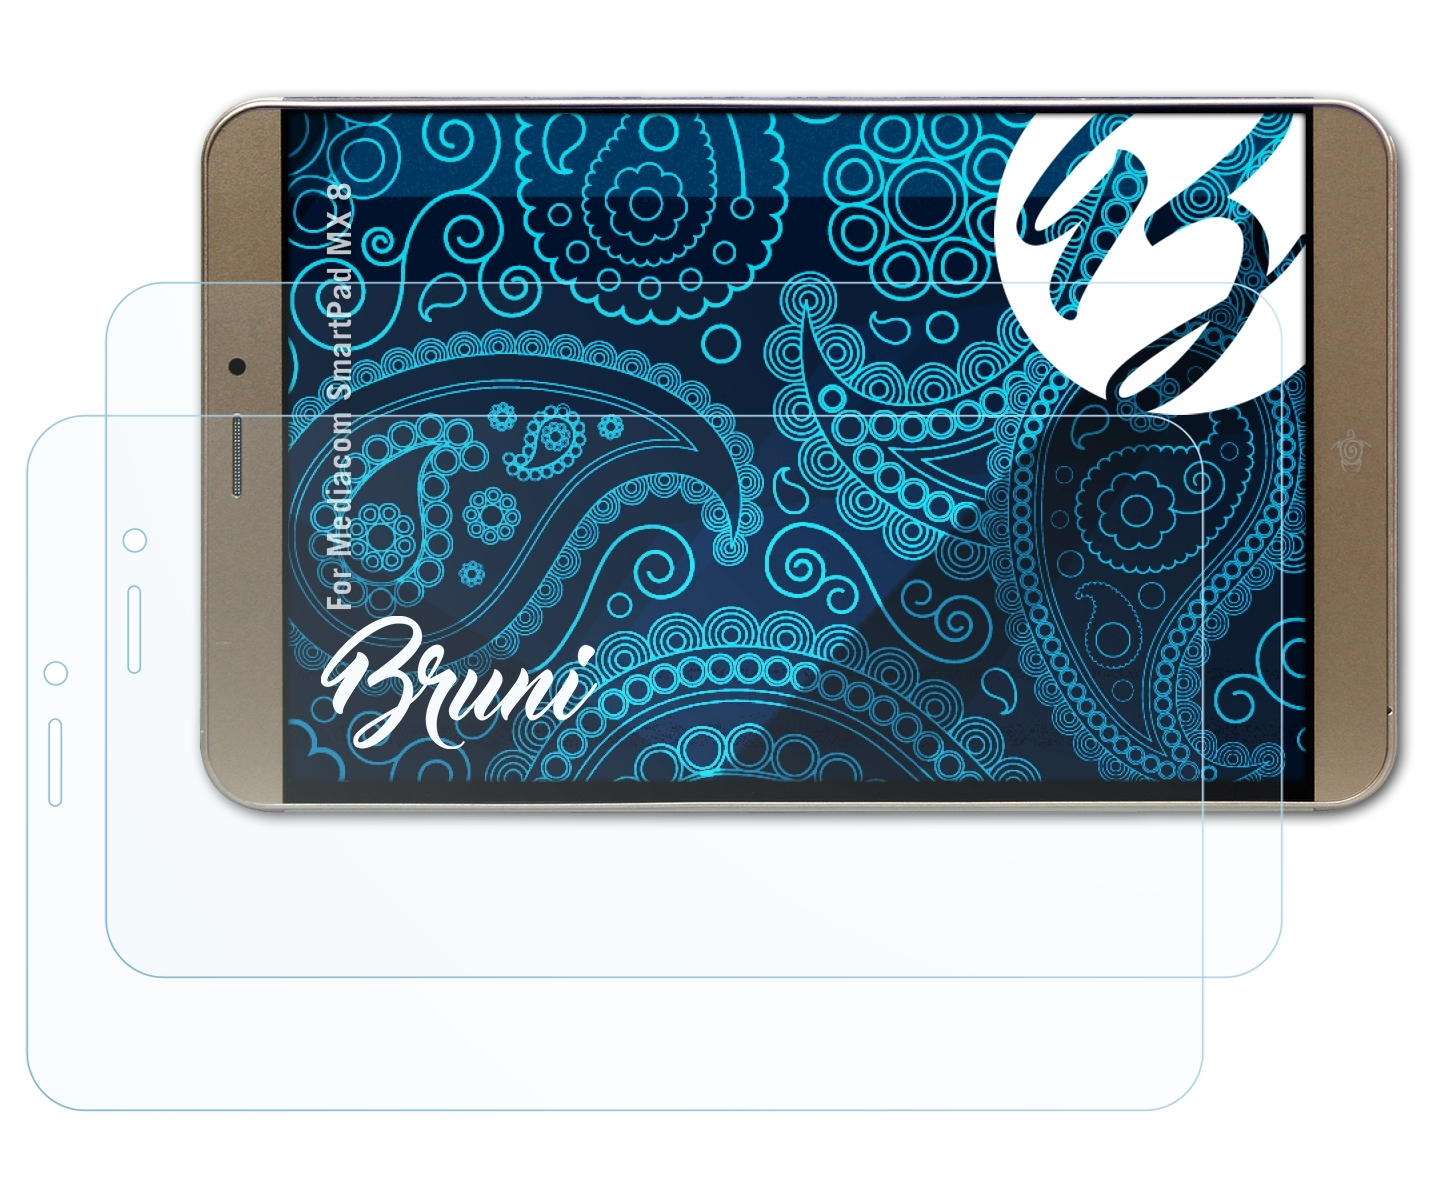 BRUNI 2x Basics-Clear Schutzfolie(für Mediacom 8) MX SmartPad